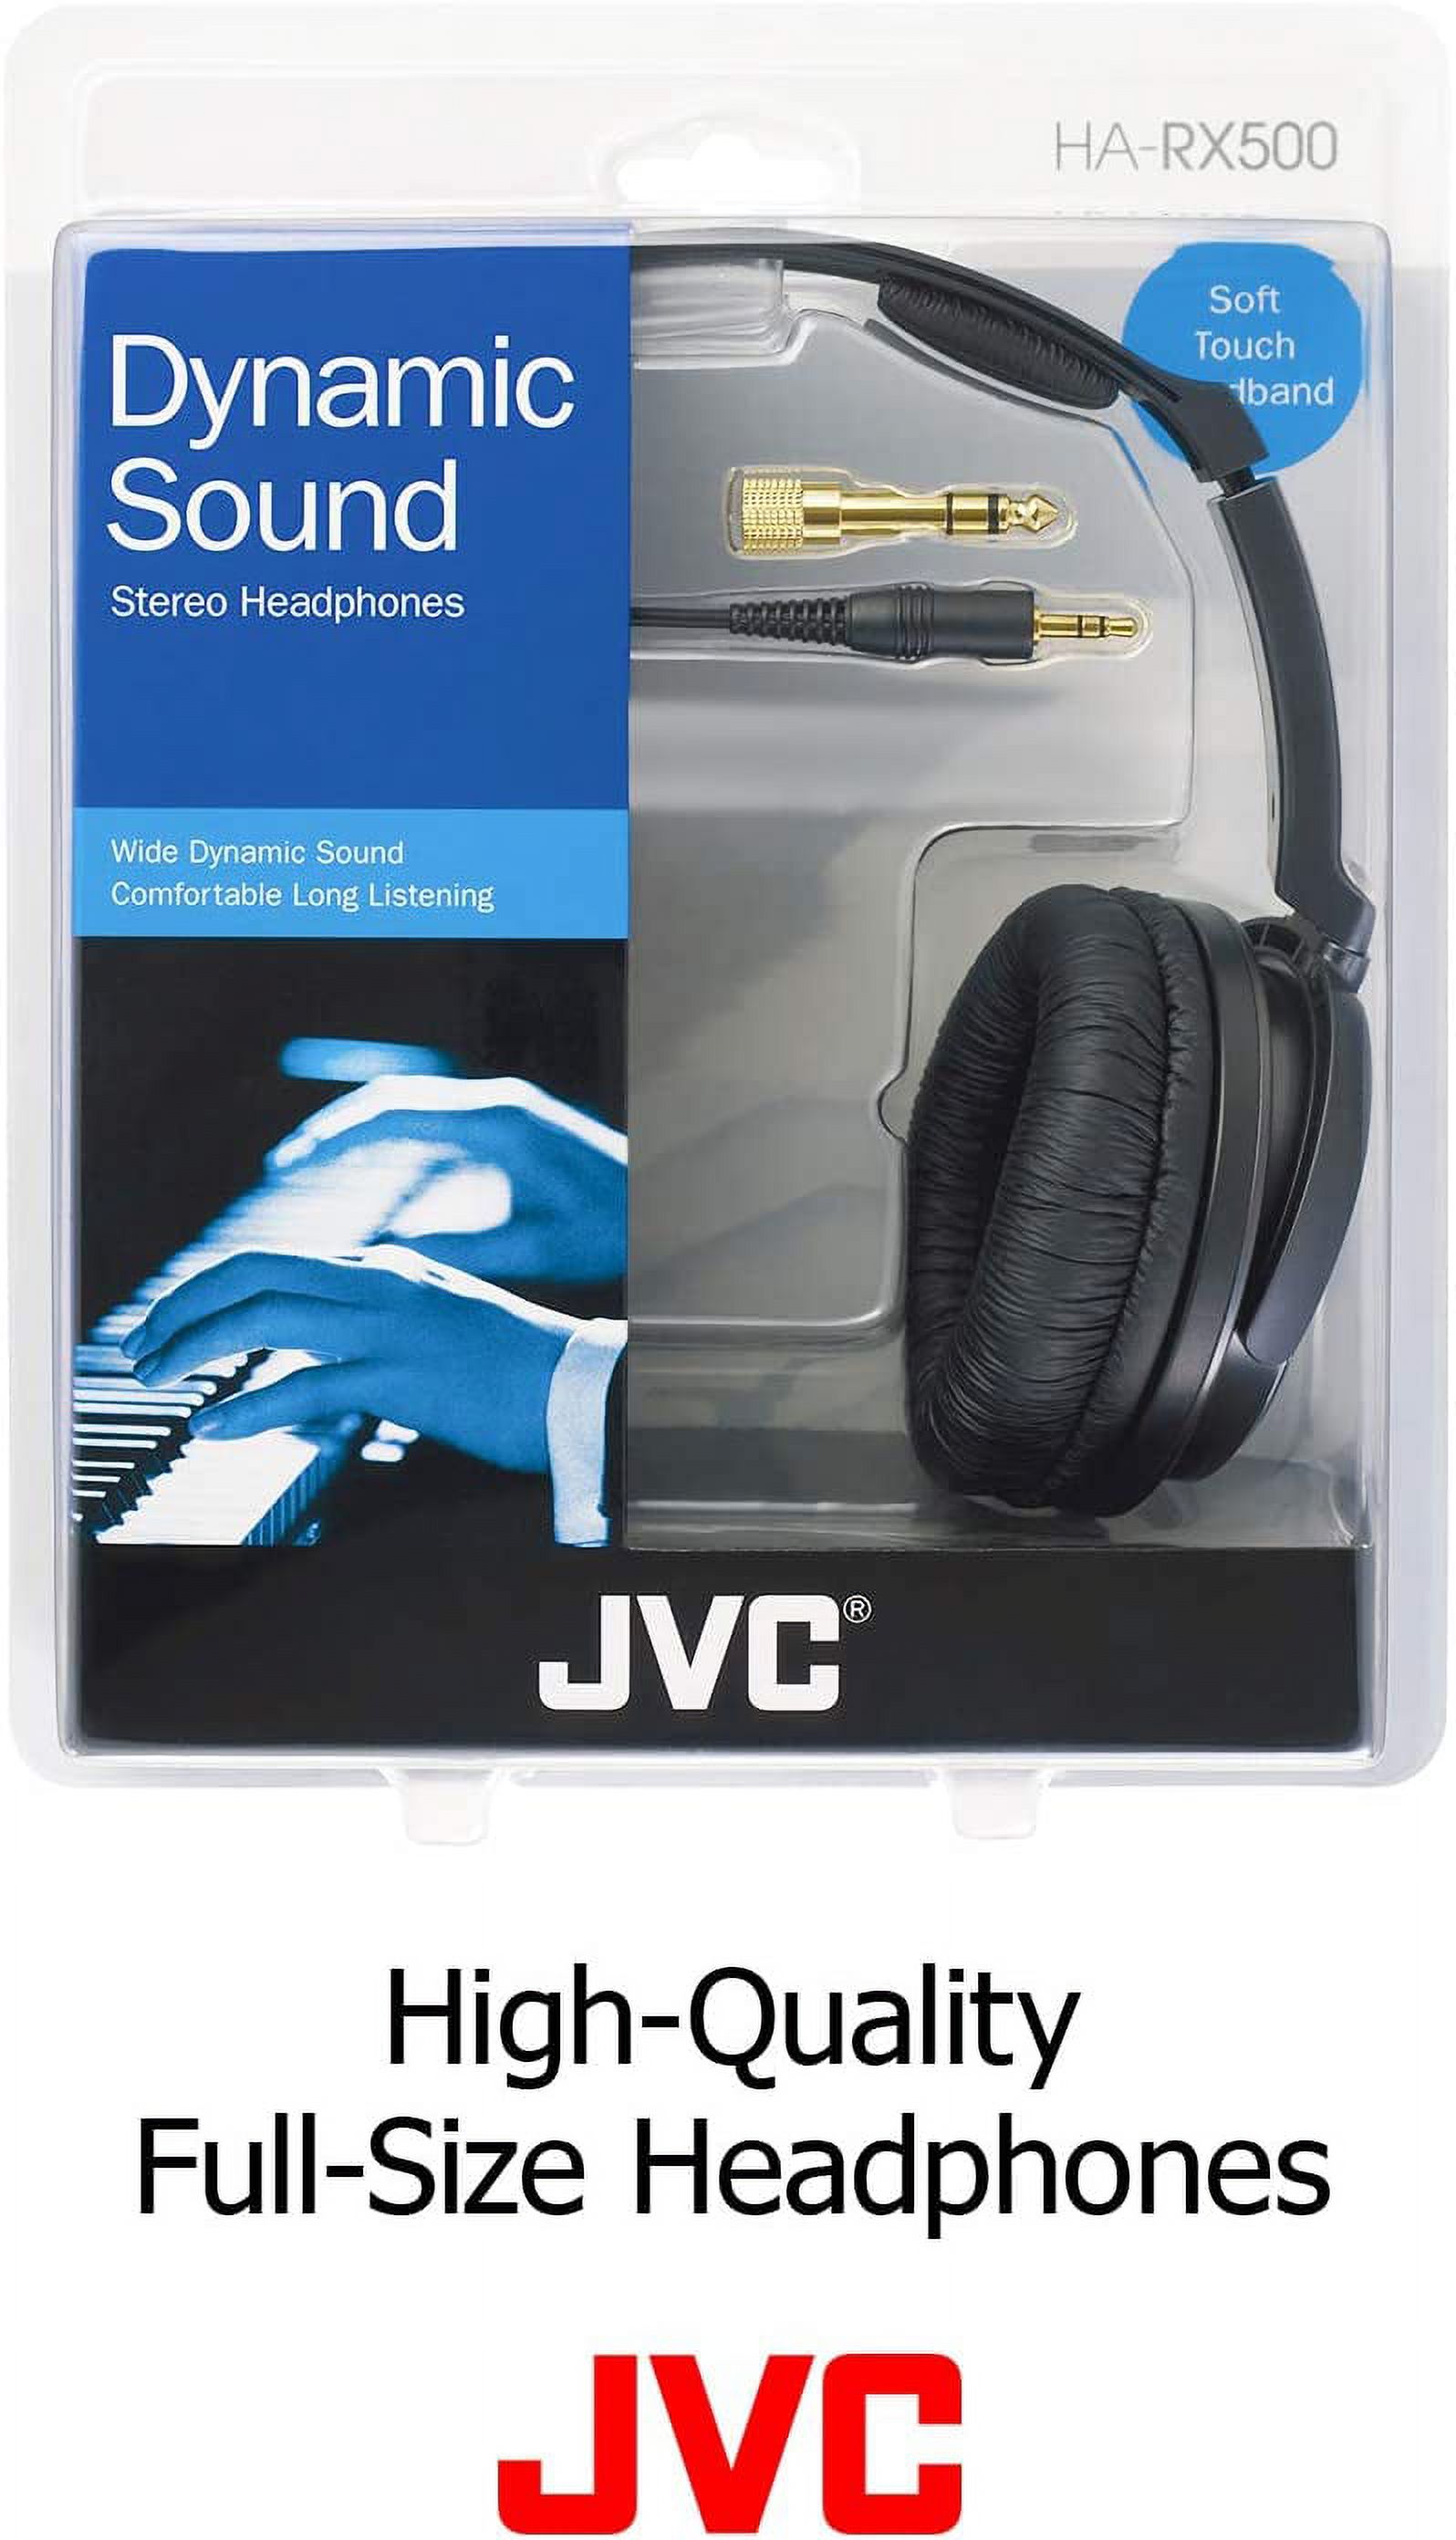 JVC Noise-Canceling On-Ear Headphones, Gray, HARX500 - image 6 of 8